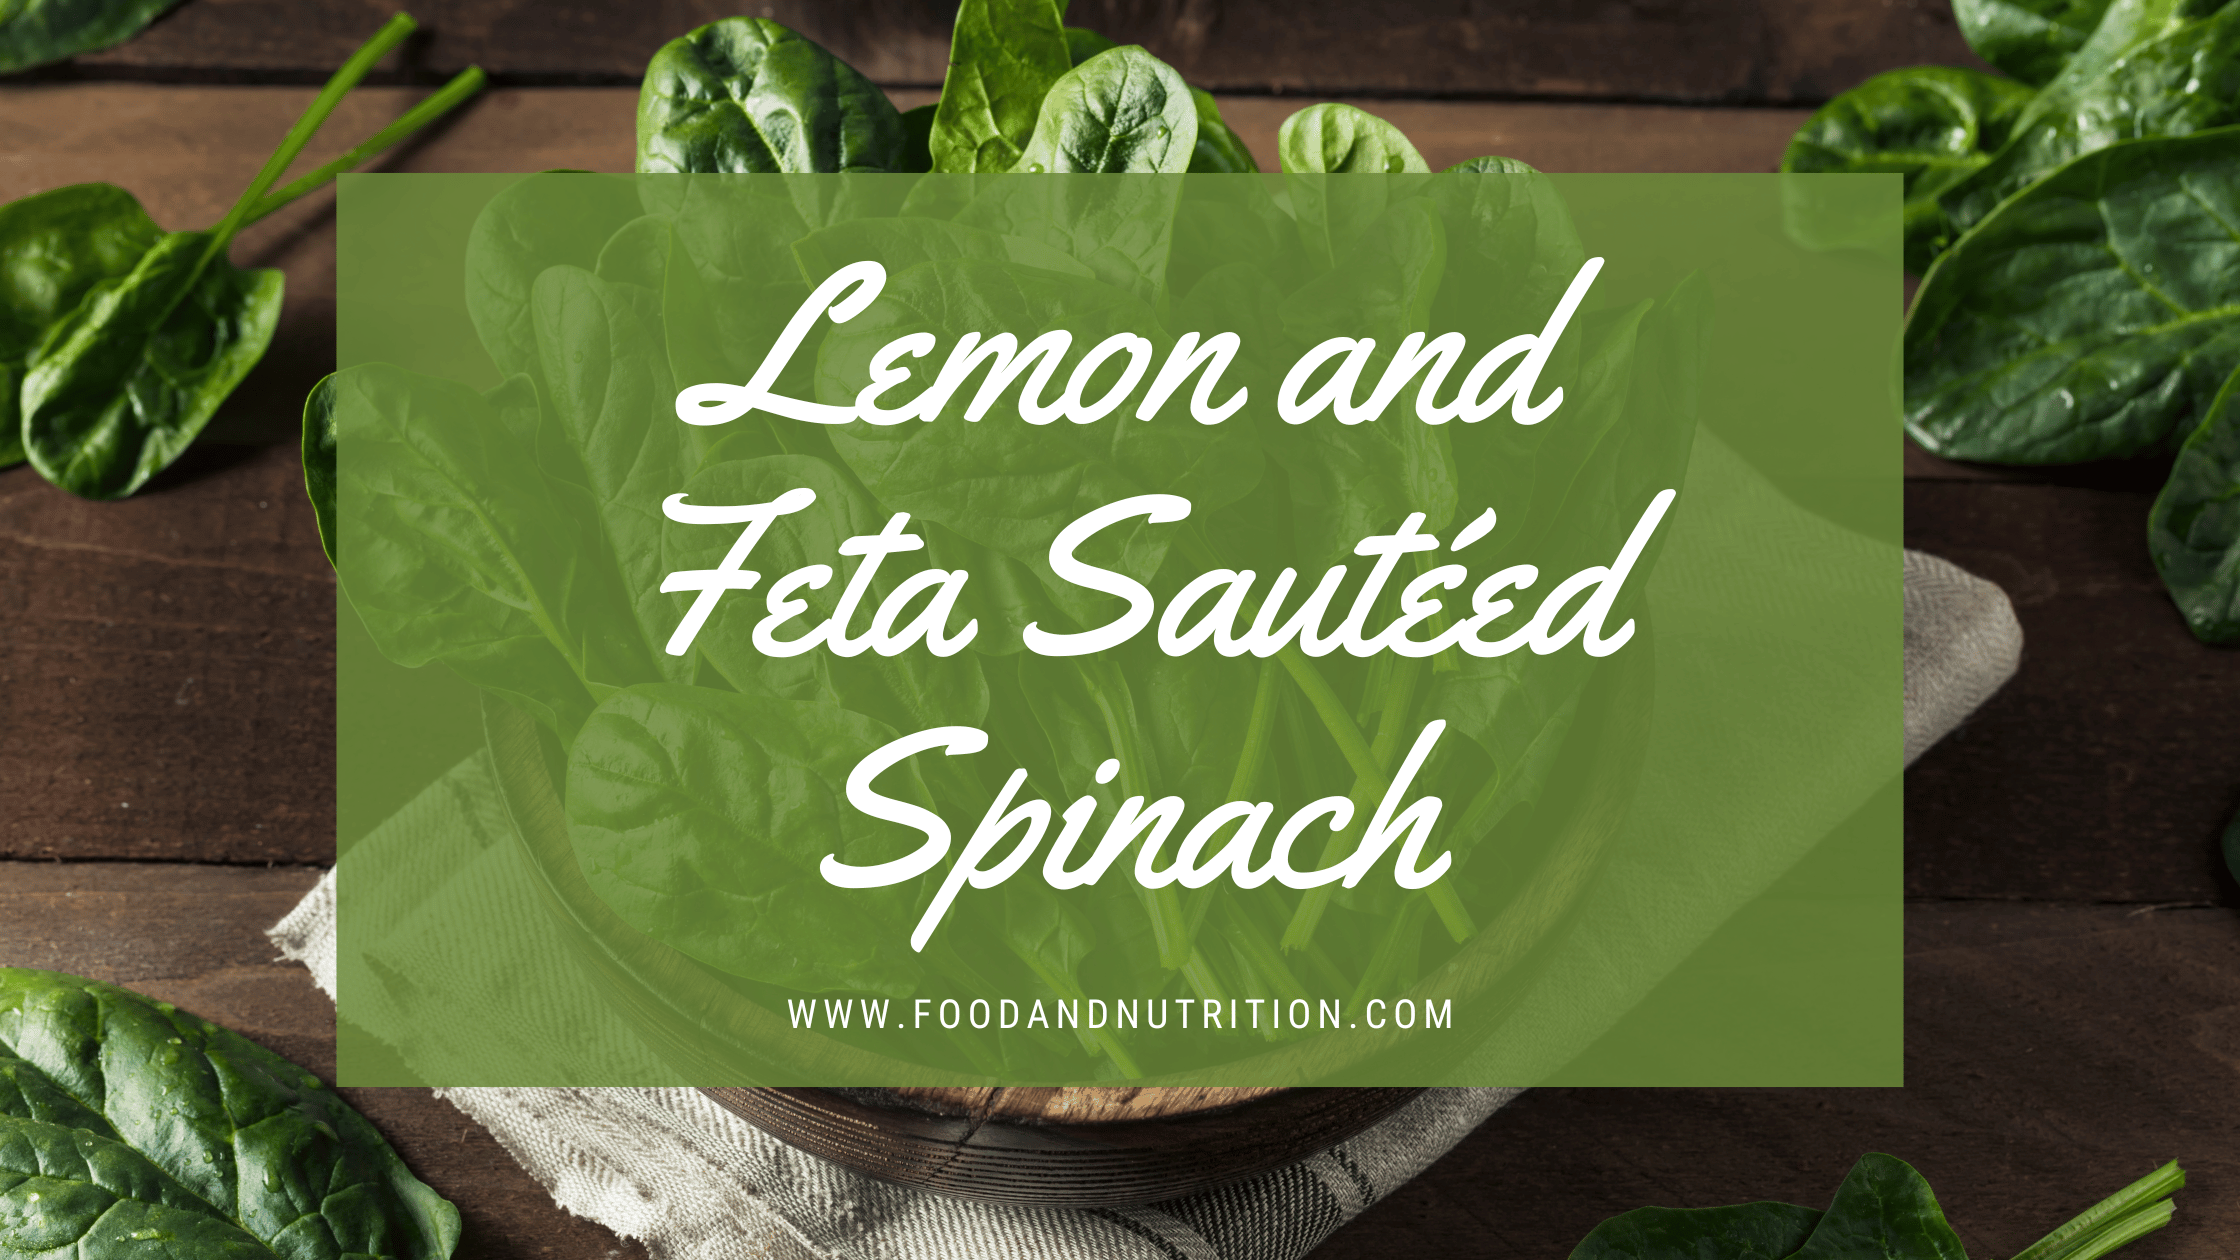 Deliciously Nutritious: Lemon and Feta Sautéed Spinach Recipe